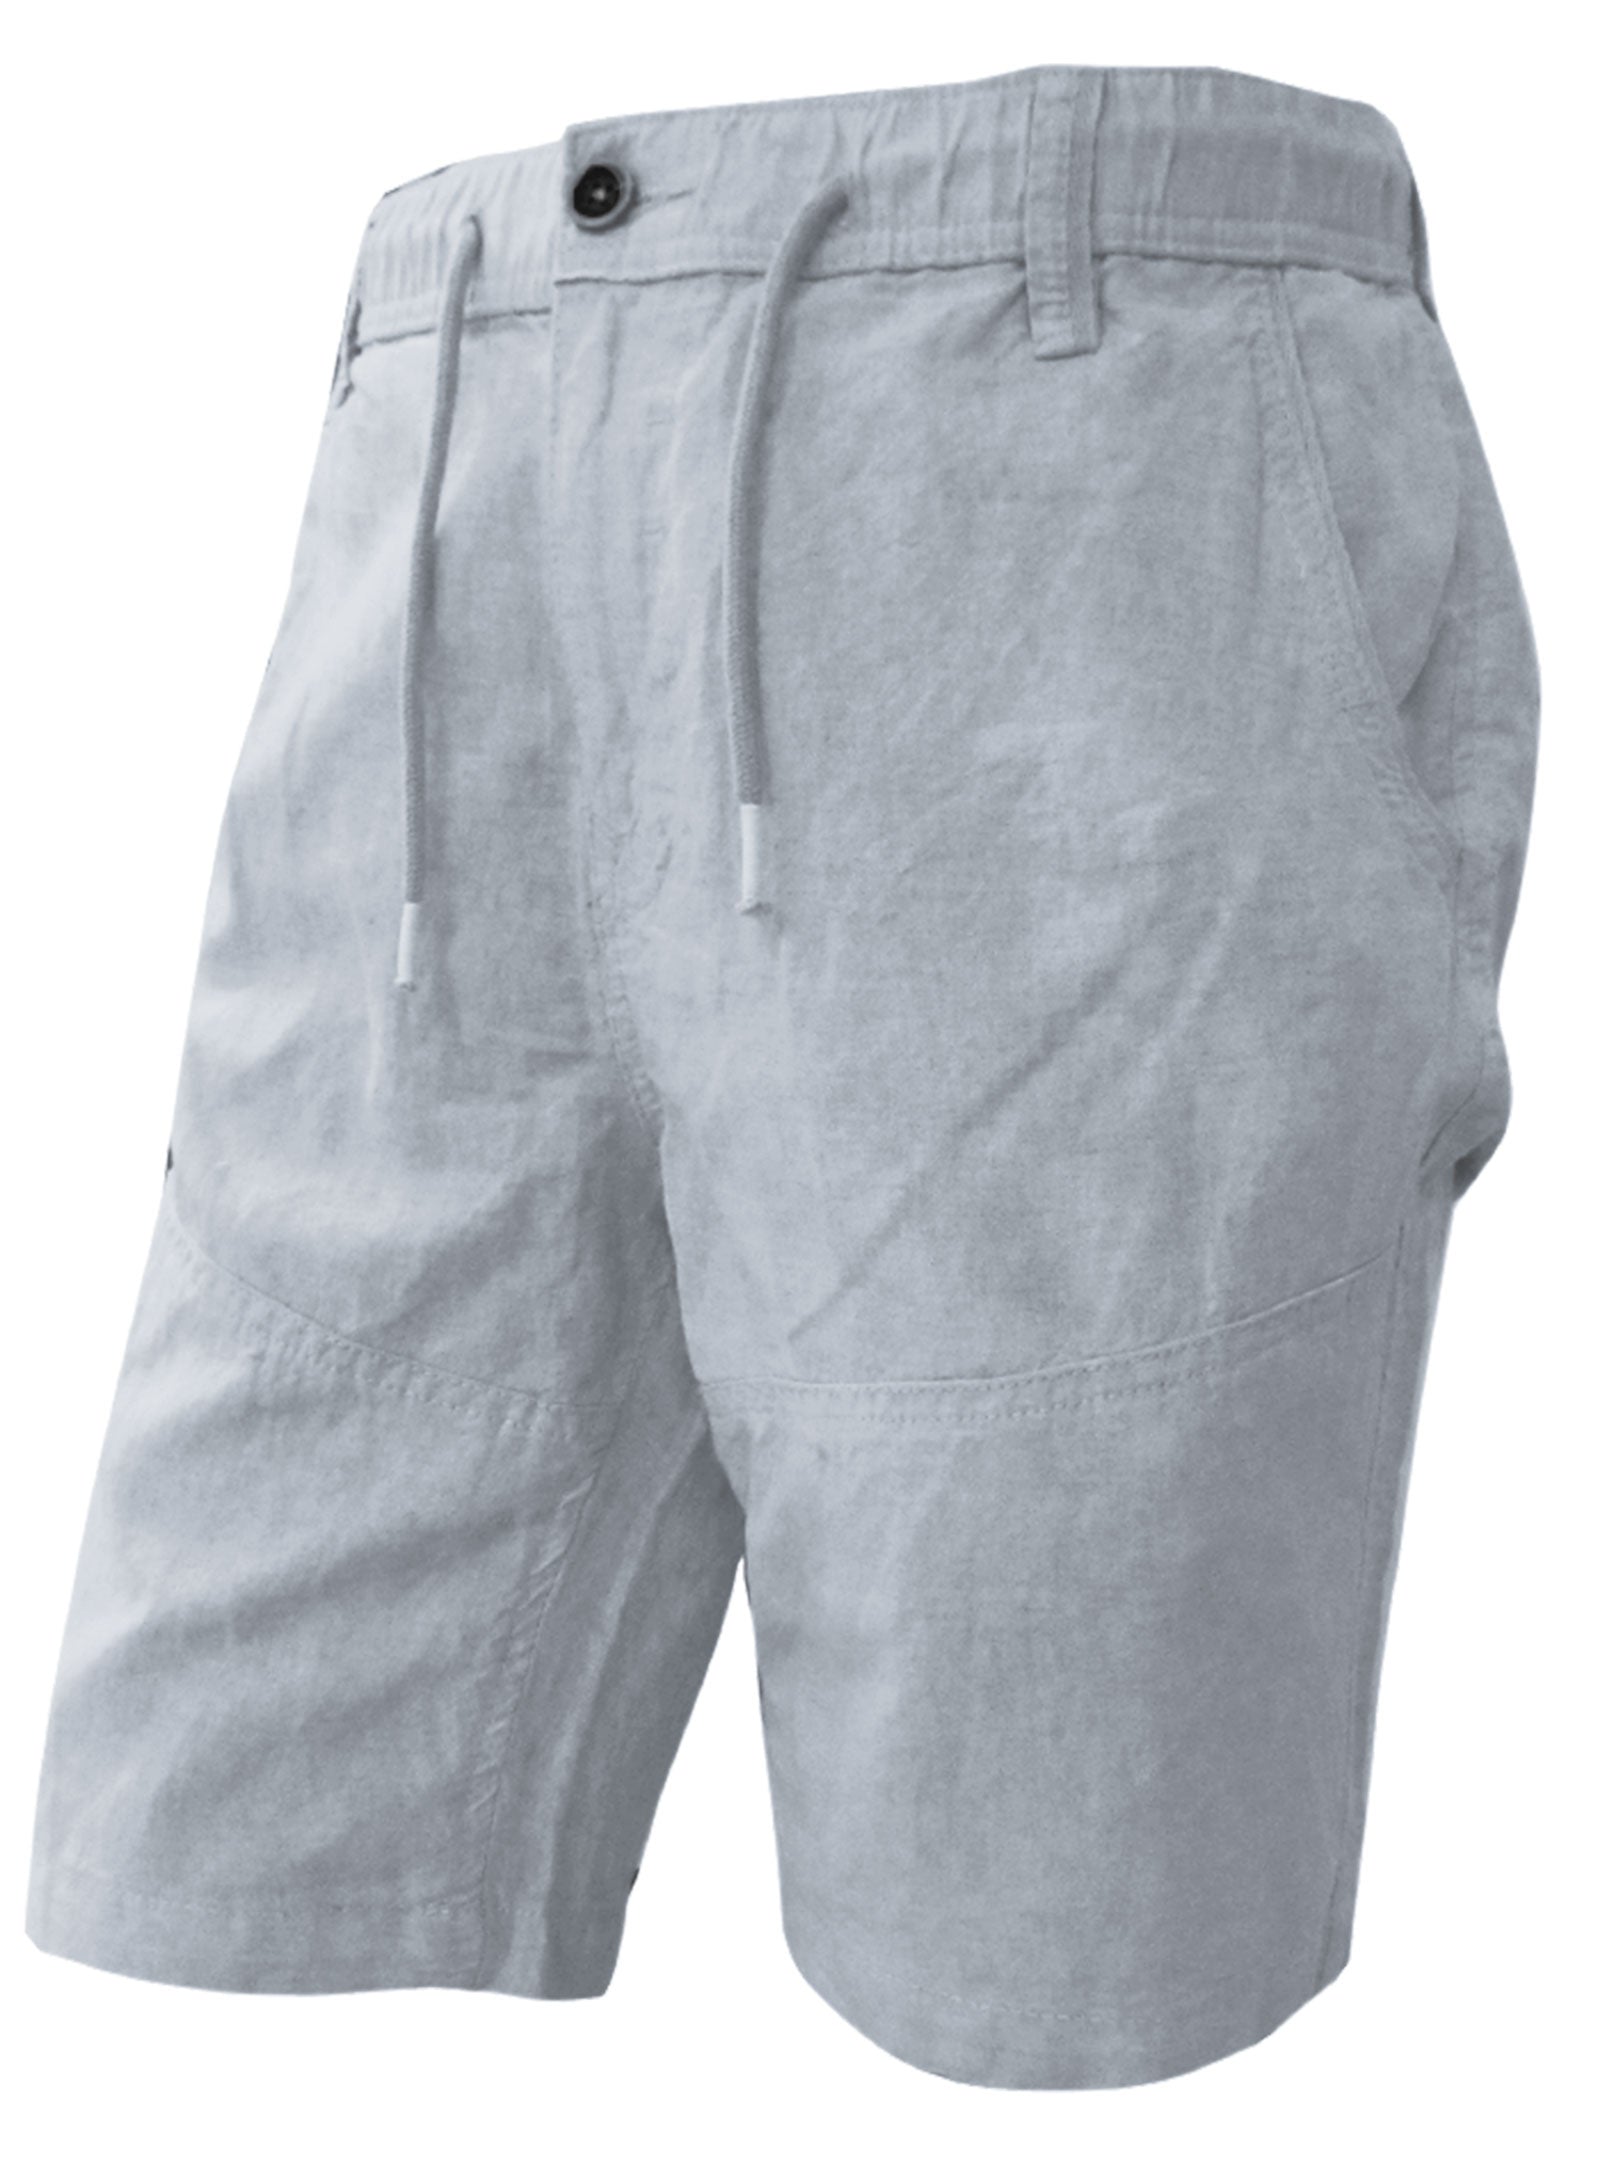 LINNY |Linen Cotton shorts